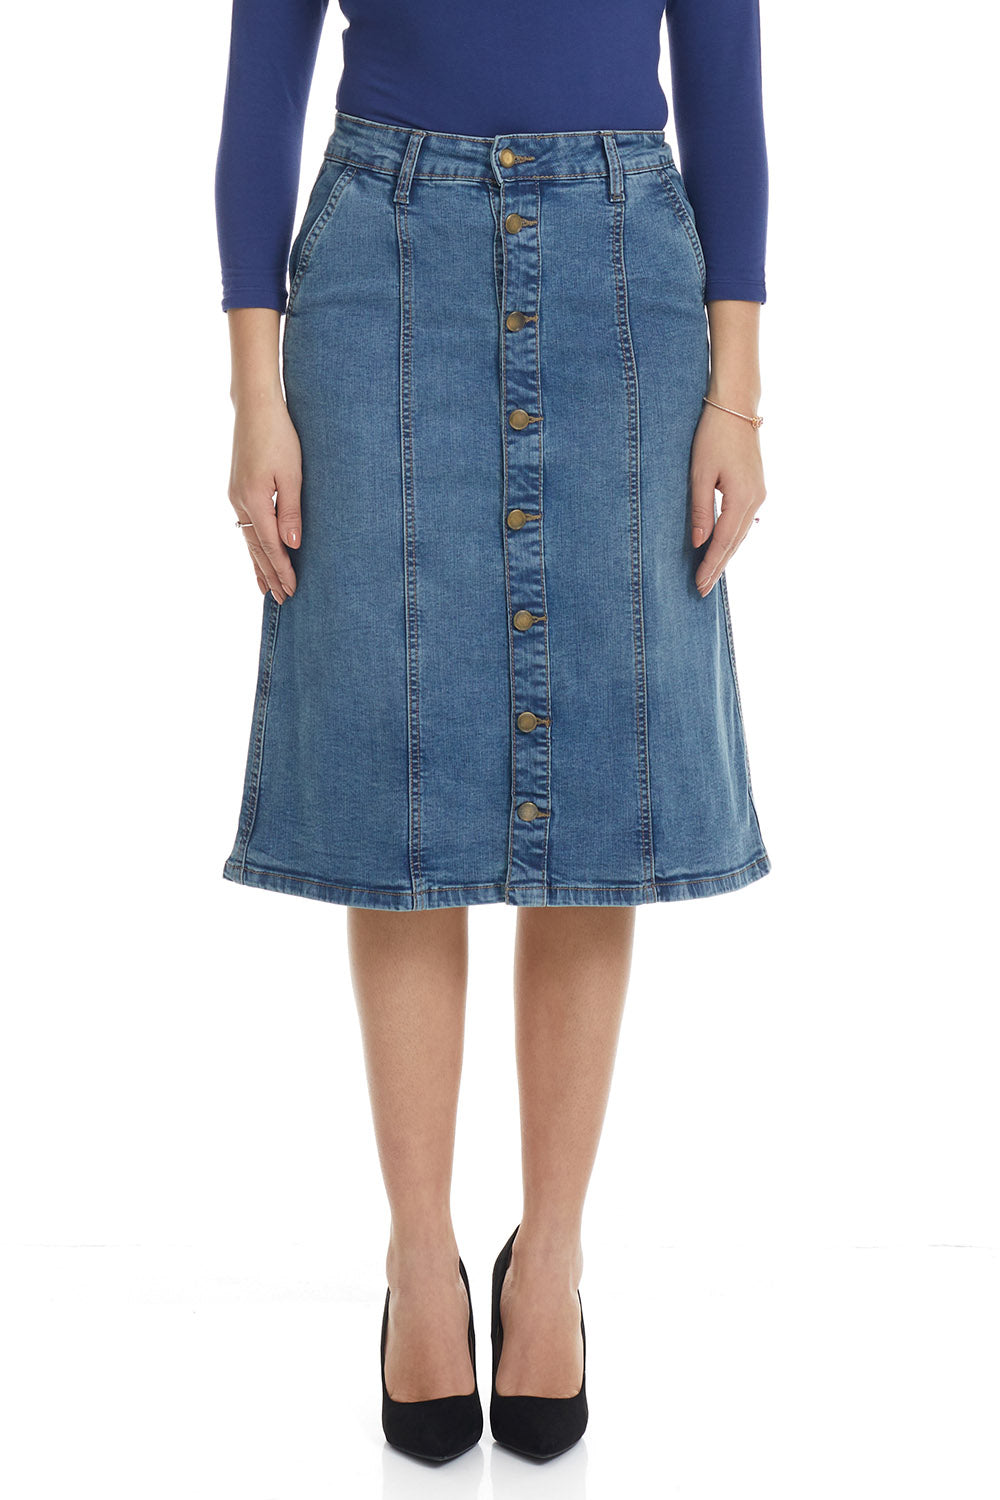 Blue A-Line Denim Skirt | Skirts | Tommy Hilfiger